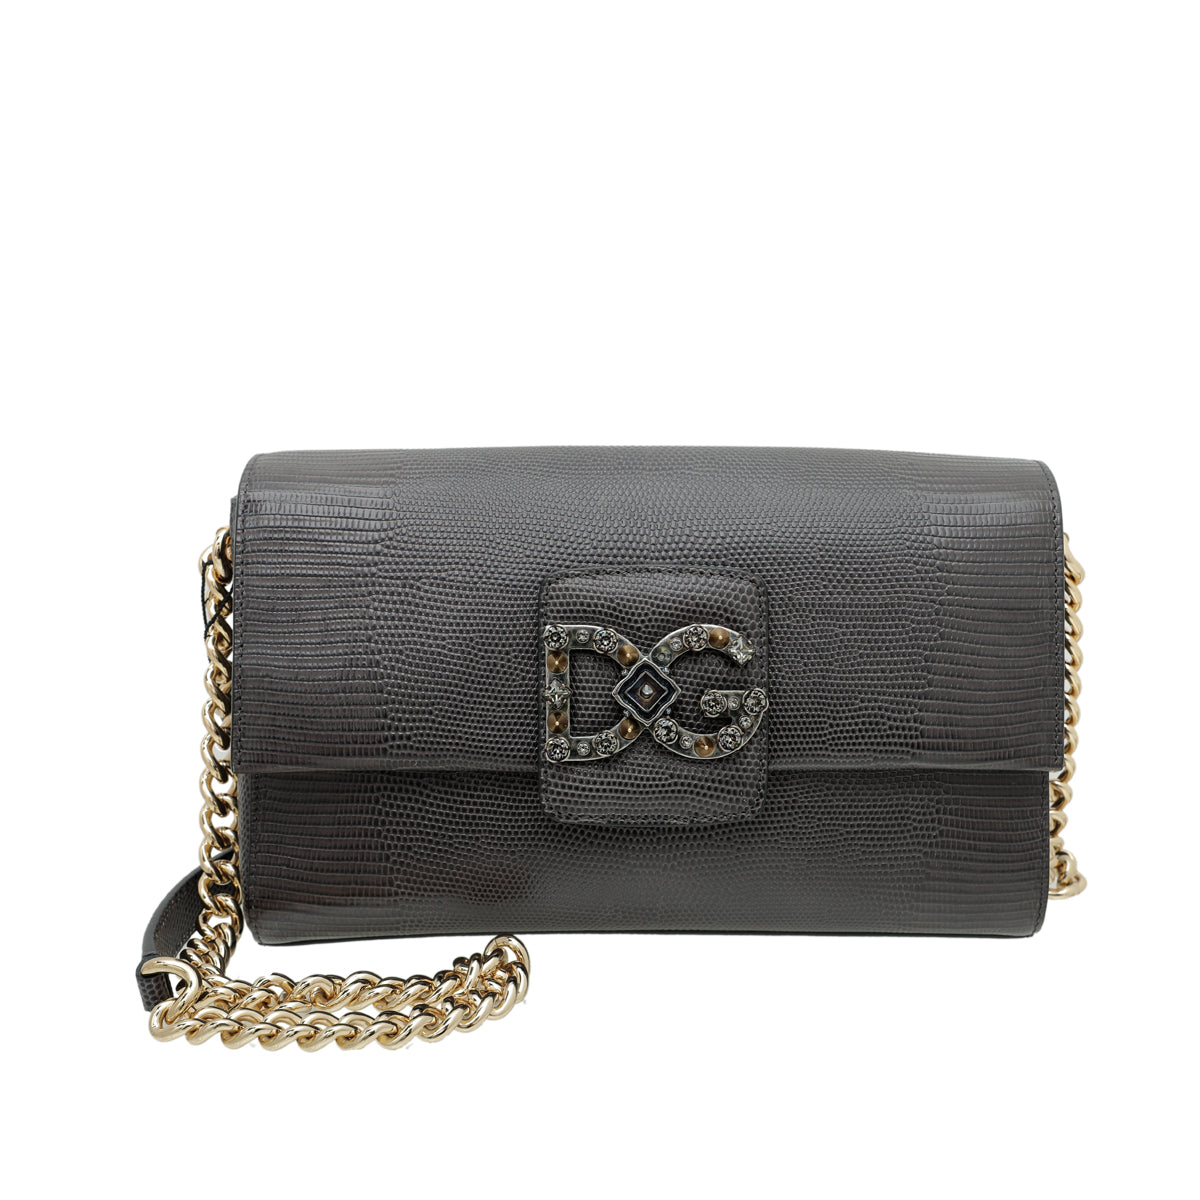 Dolce & Gabbana Dark Grey DG Millennials Iguana Print Chain Bag